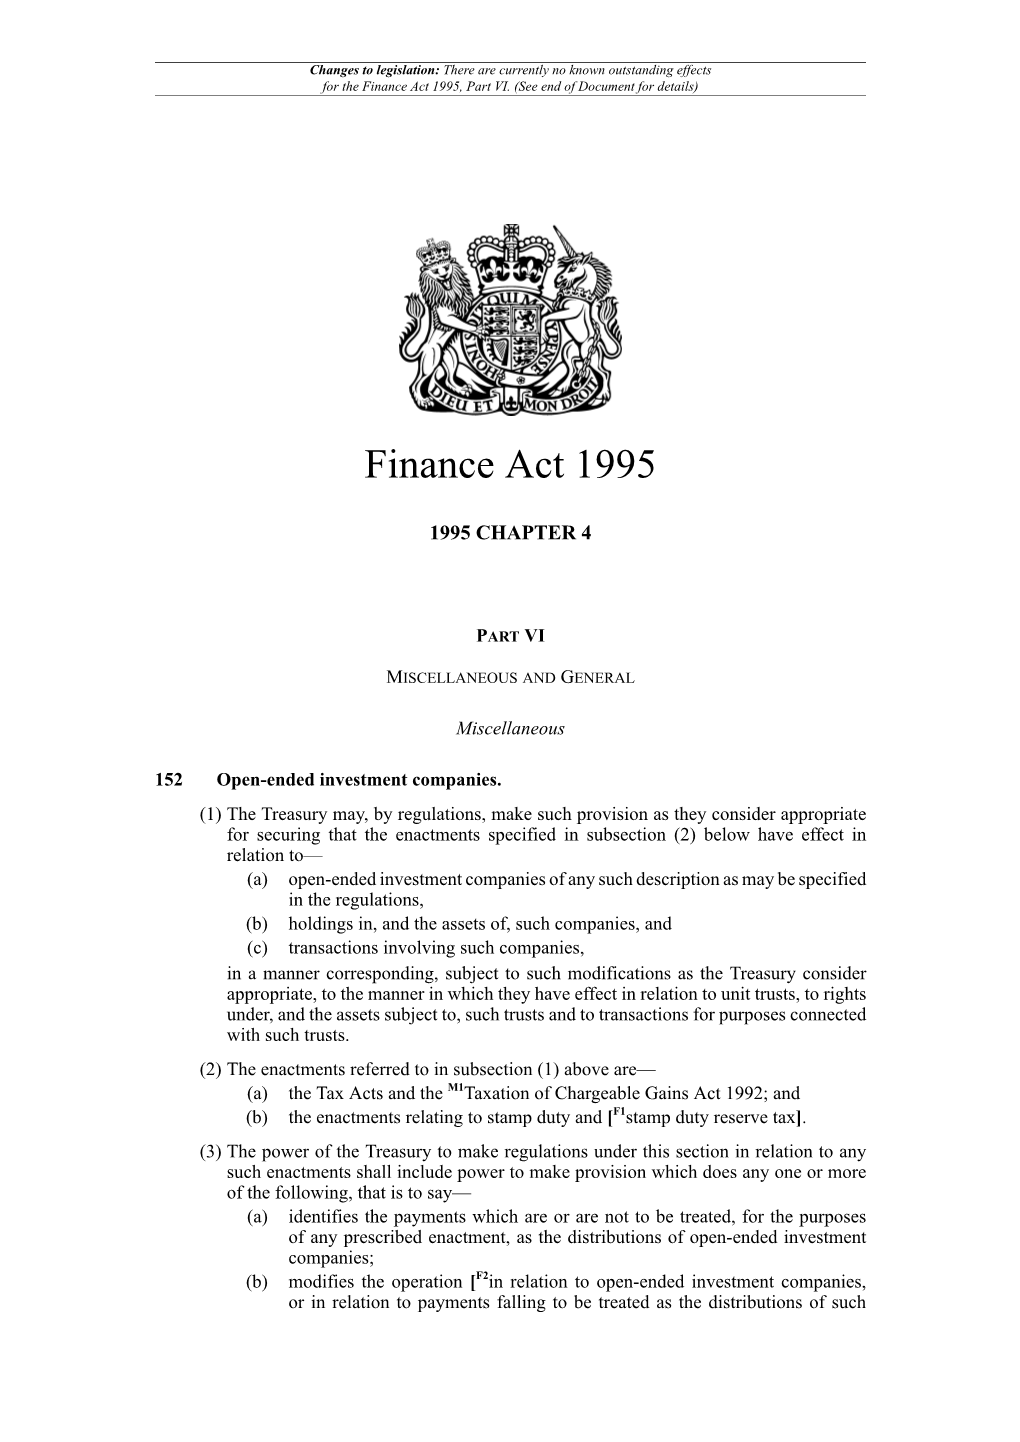 Finance Act 1995, Part VI